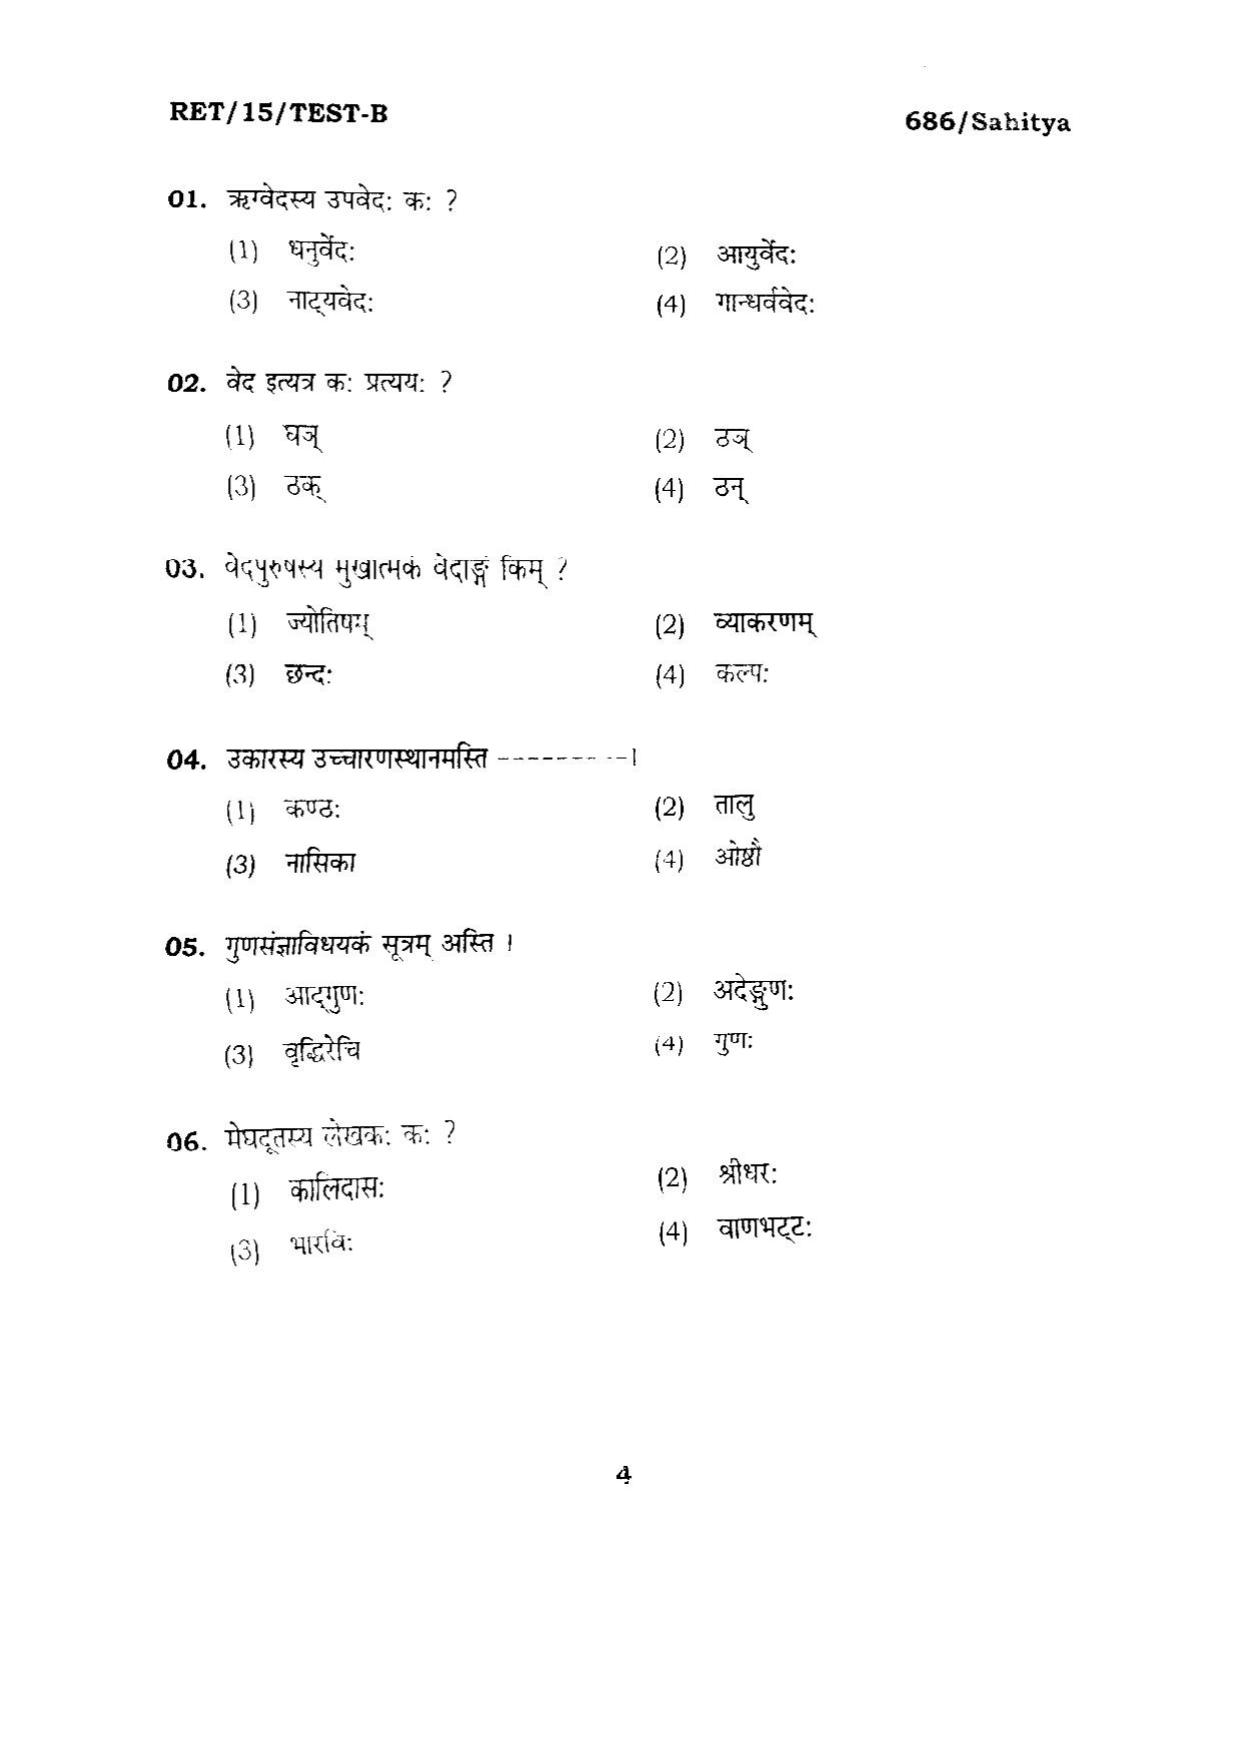 BHU RET SAHITYA 2015 Question Paper - Page 4